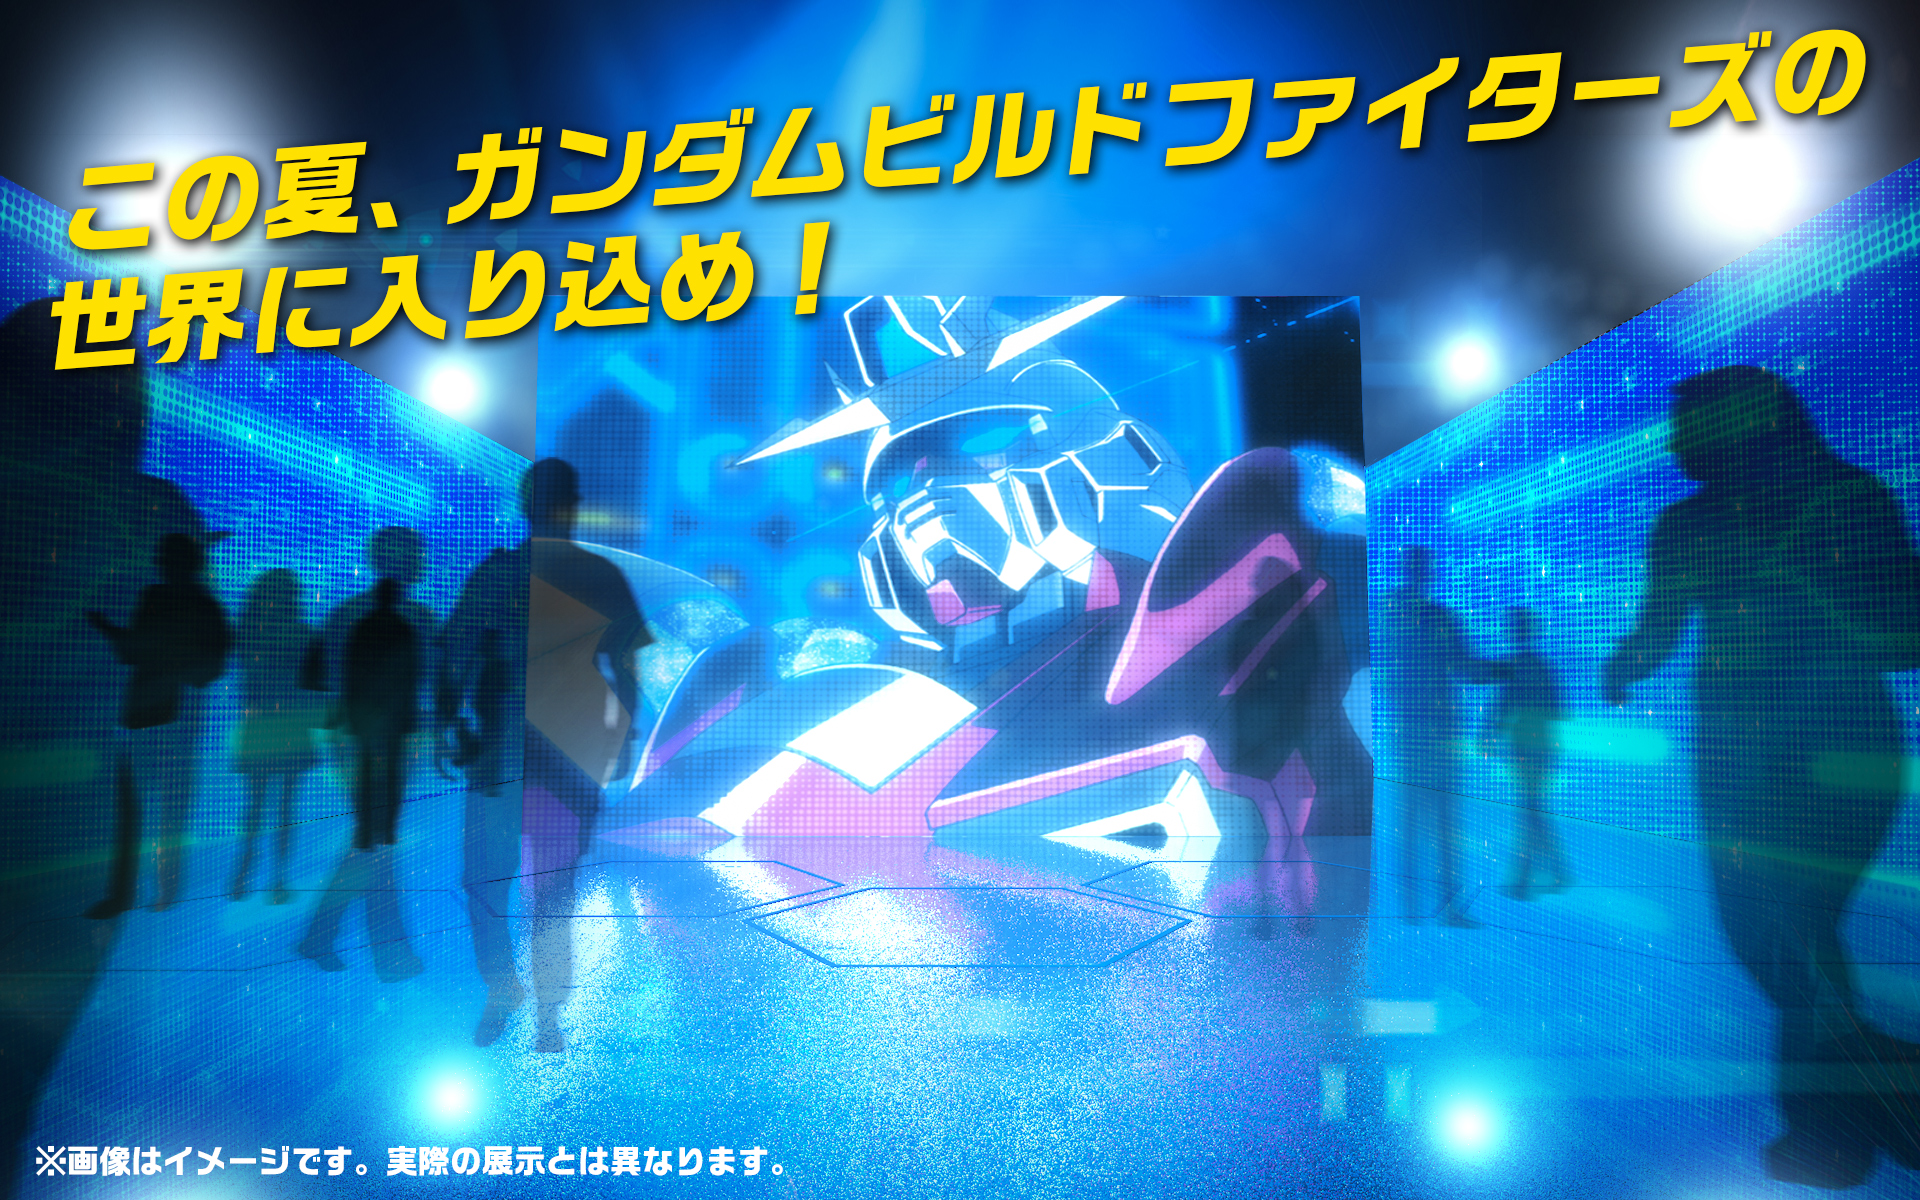 Gunpla Expo World Tour Japan 2016 Summer バンダイ ホビーサイト